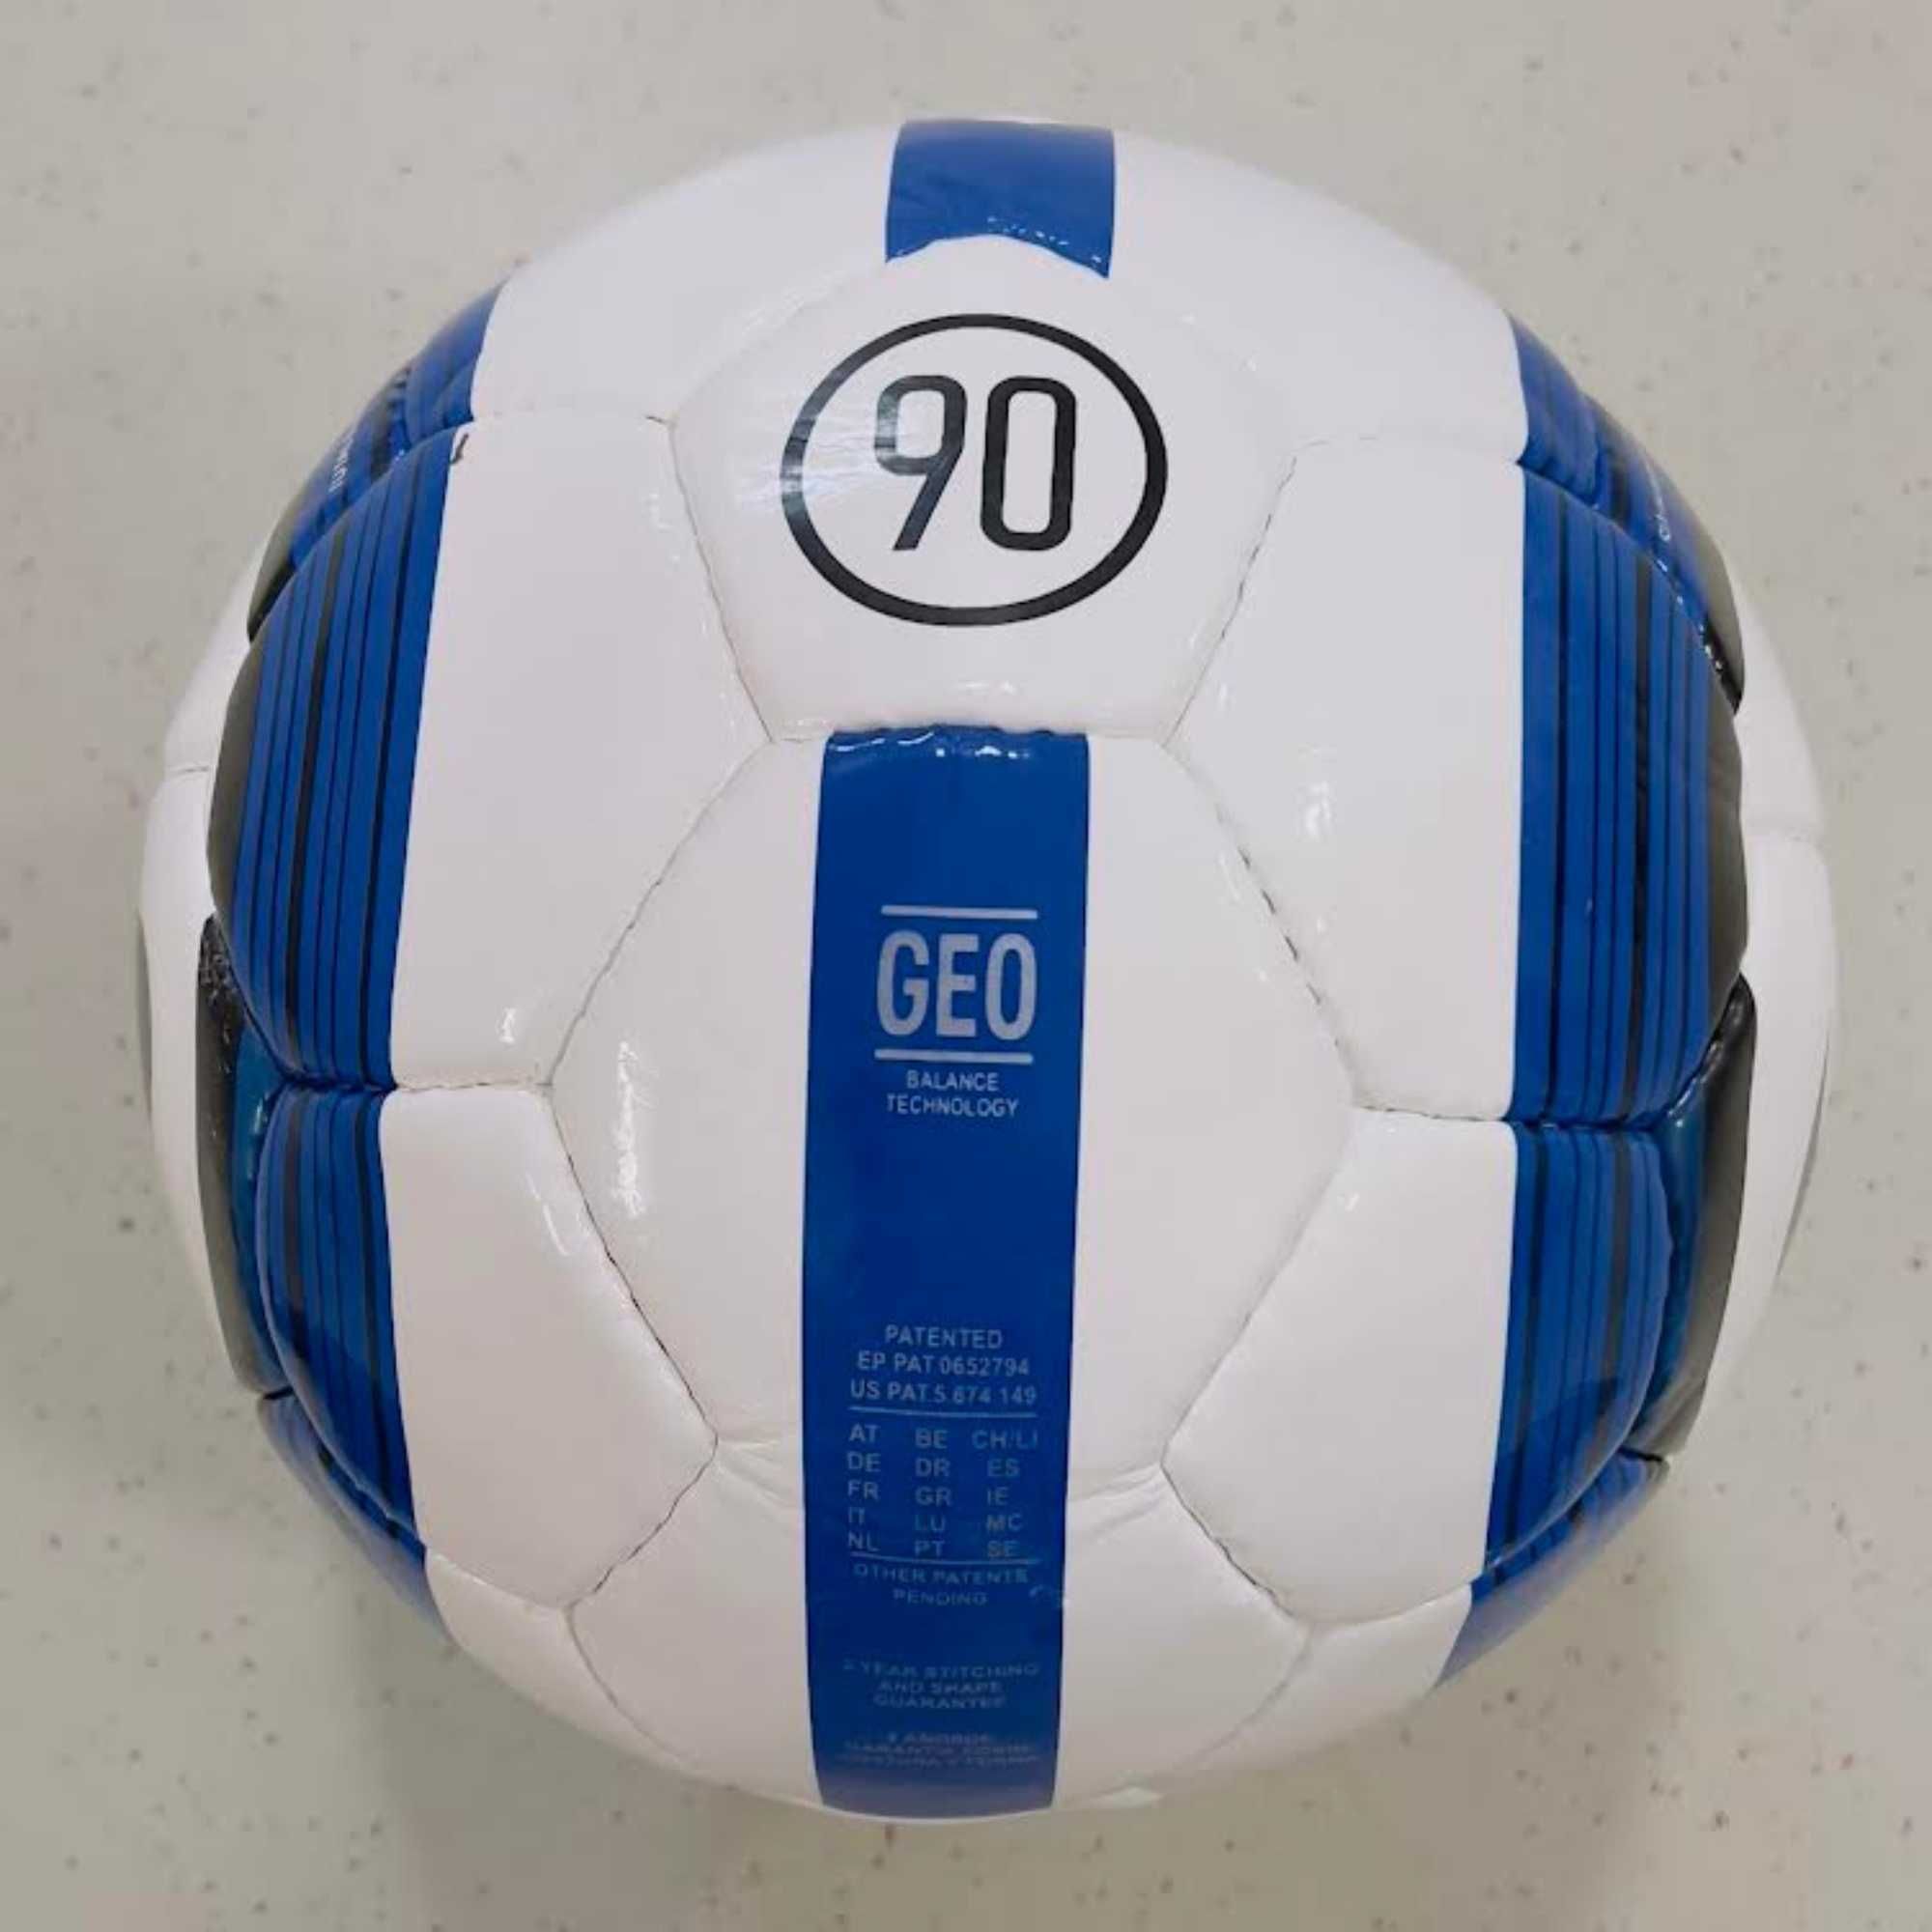 Nike Total 90 premier league League Swift 2005 match ball size 5 blue